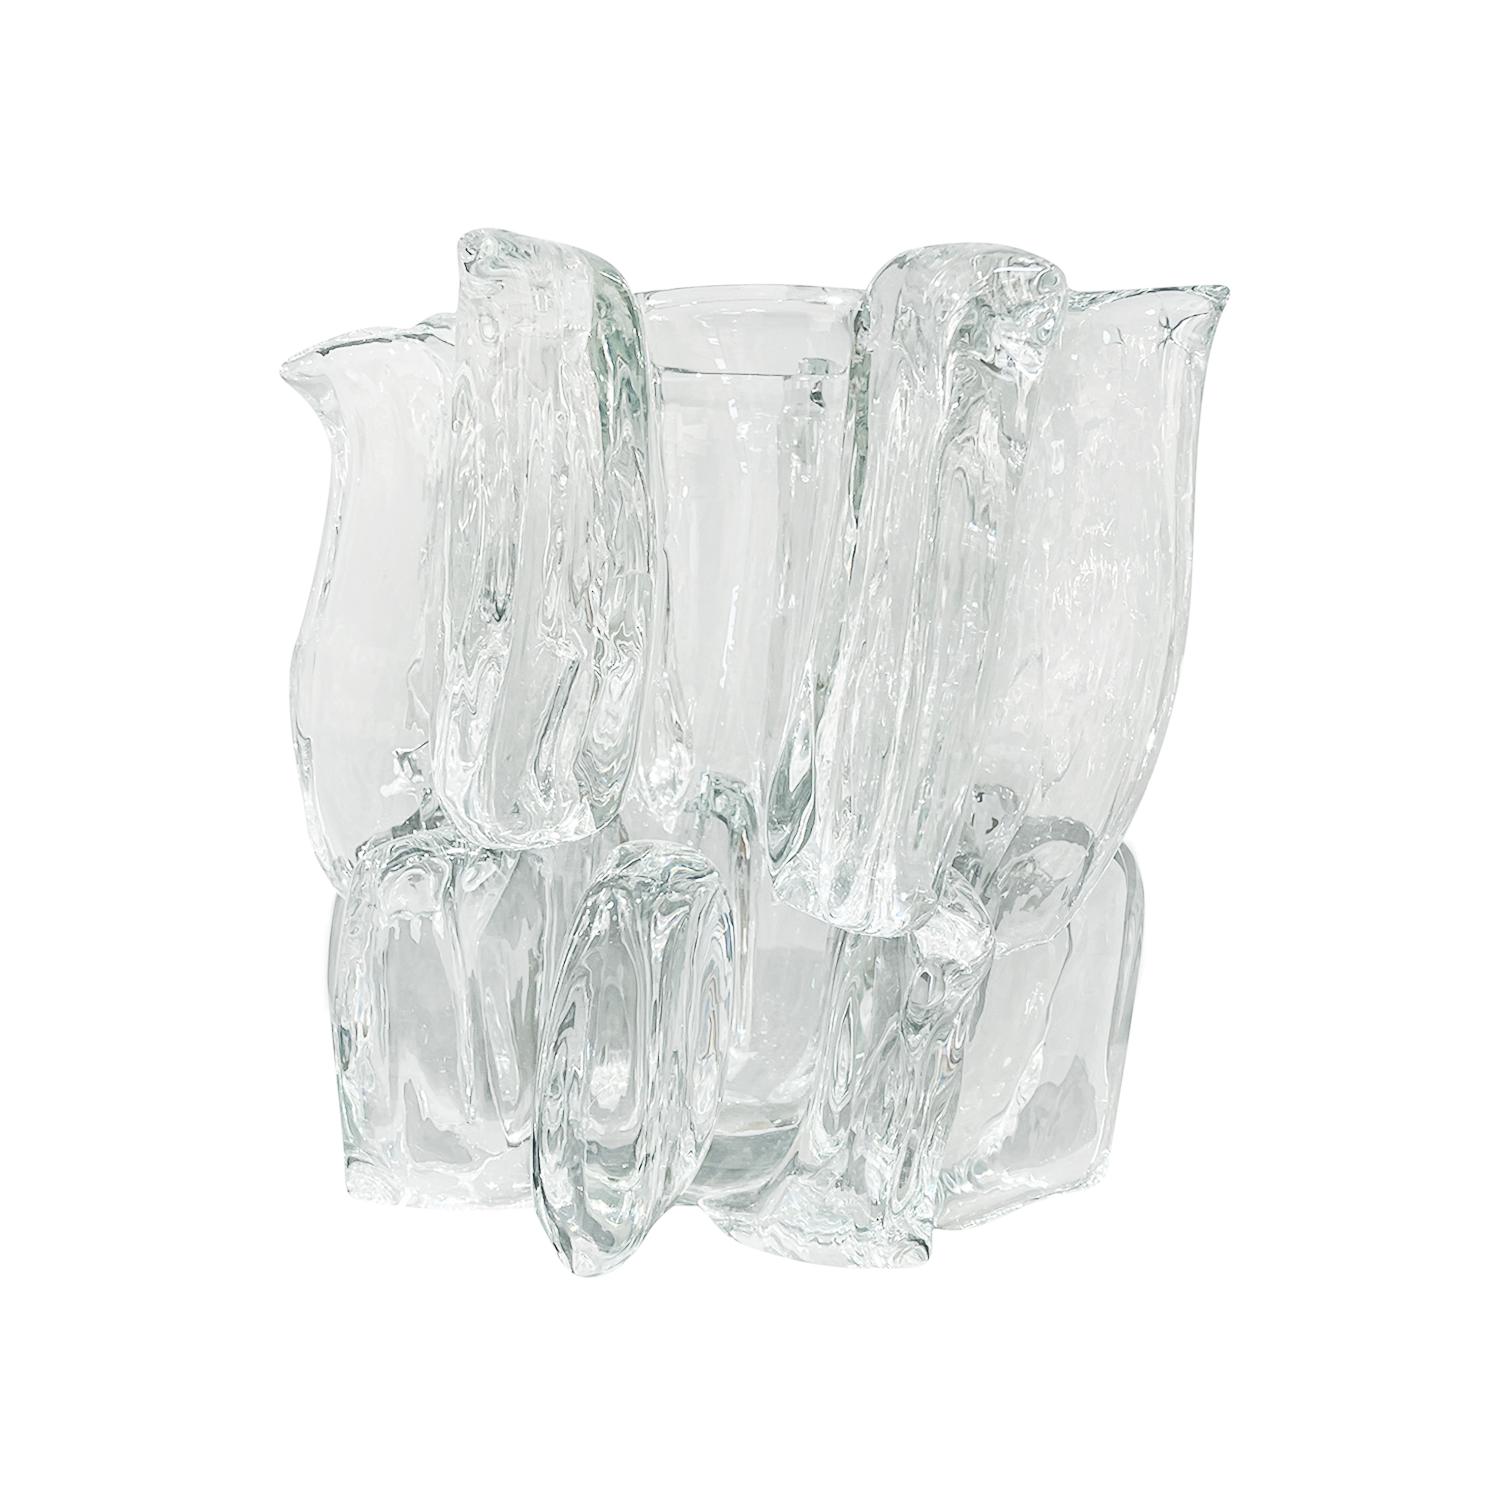 Mid-Century Modern 21st Century Clear German Sculptural Art Glass Vase, Décor by Martin Potsch For Sale